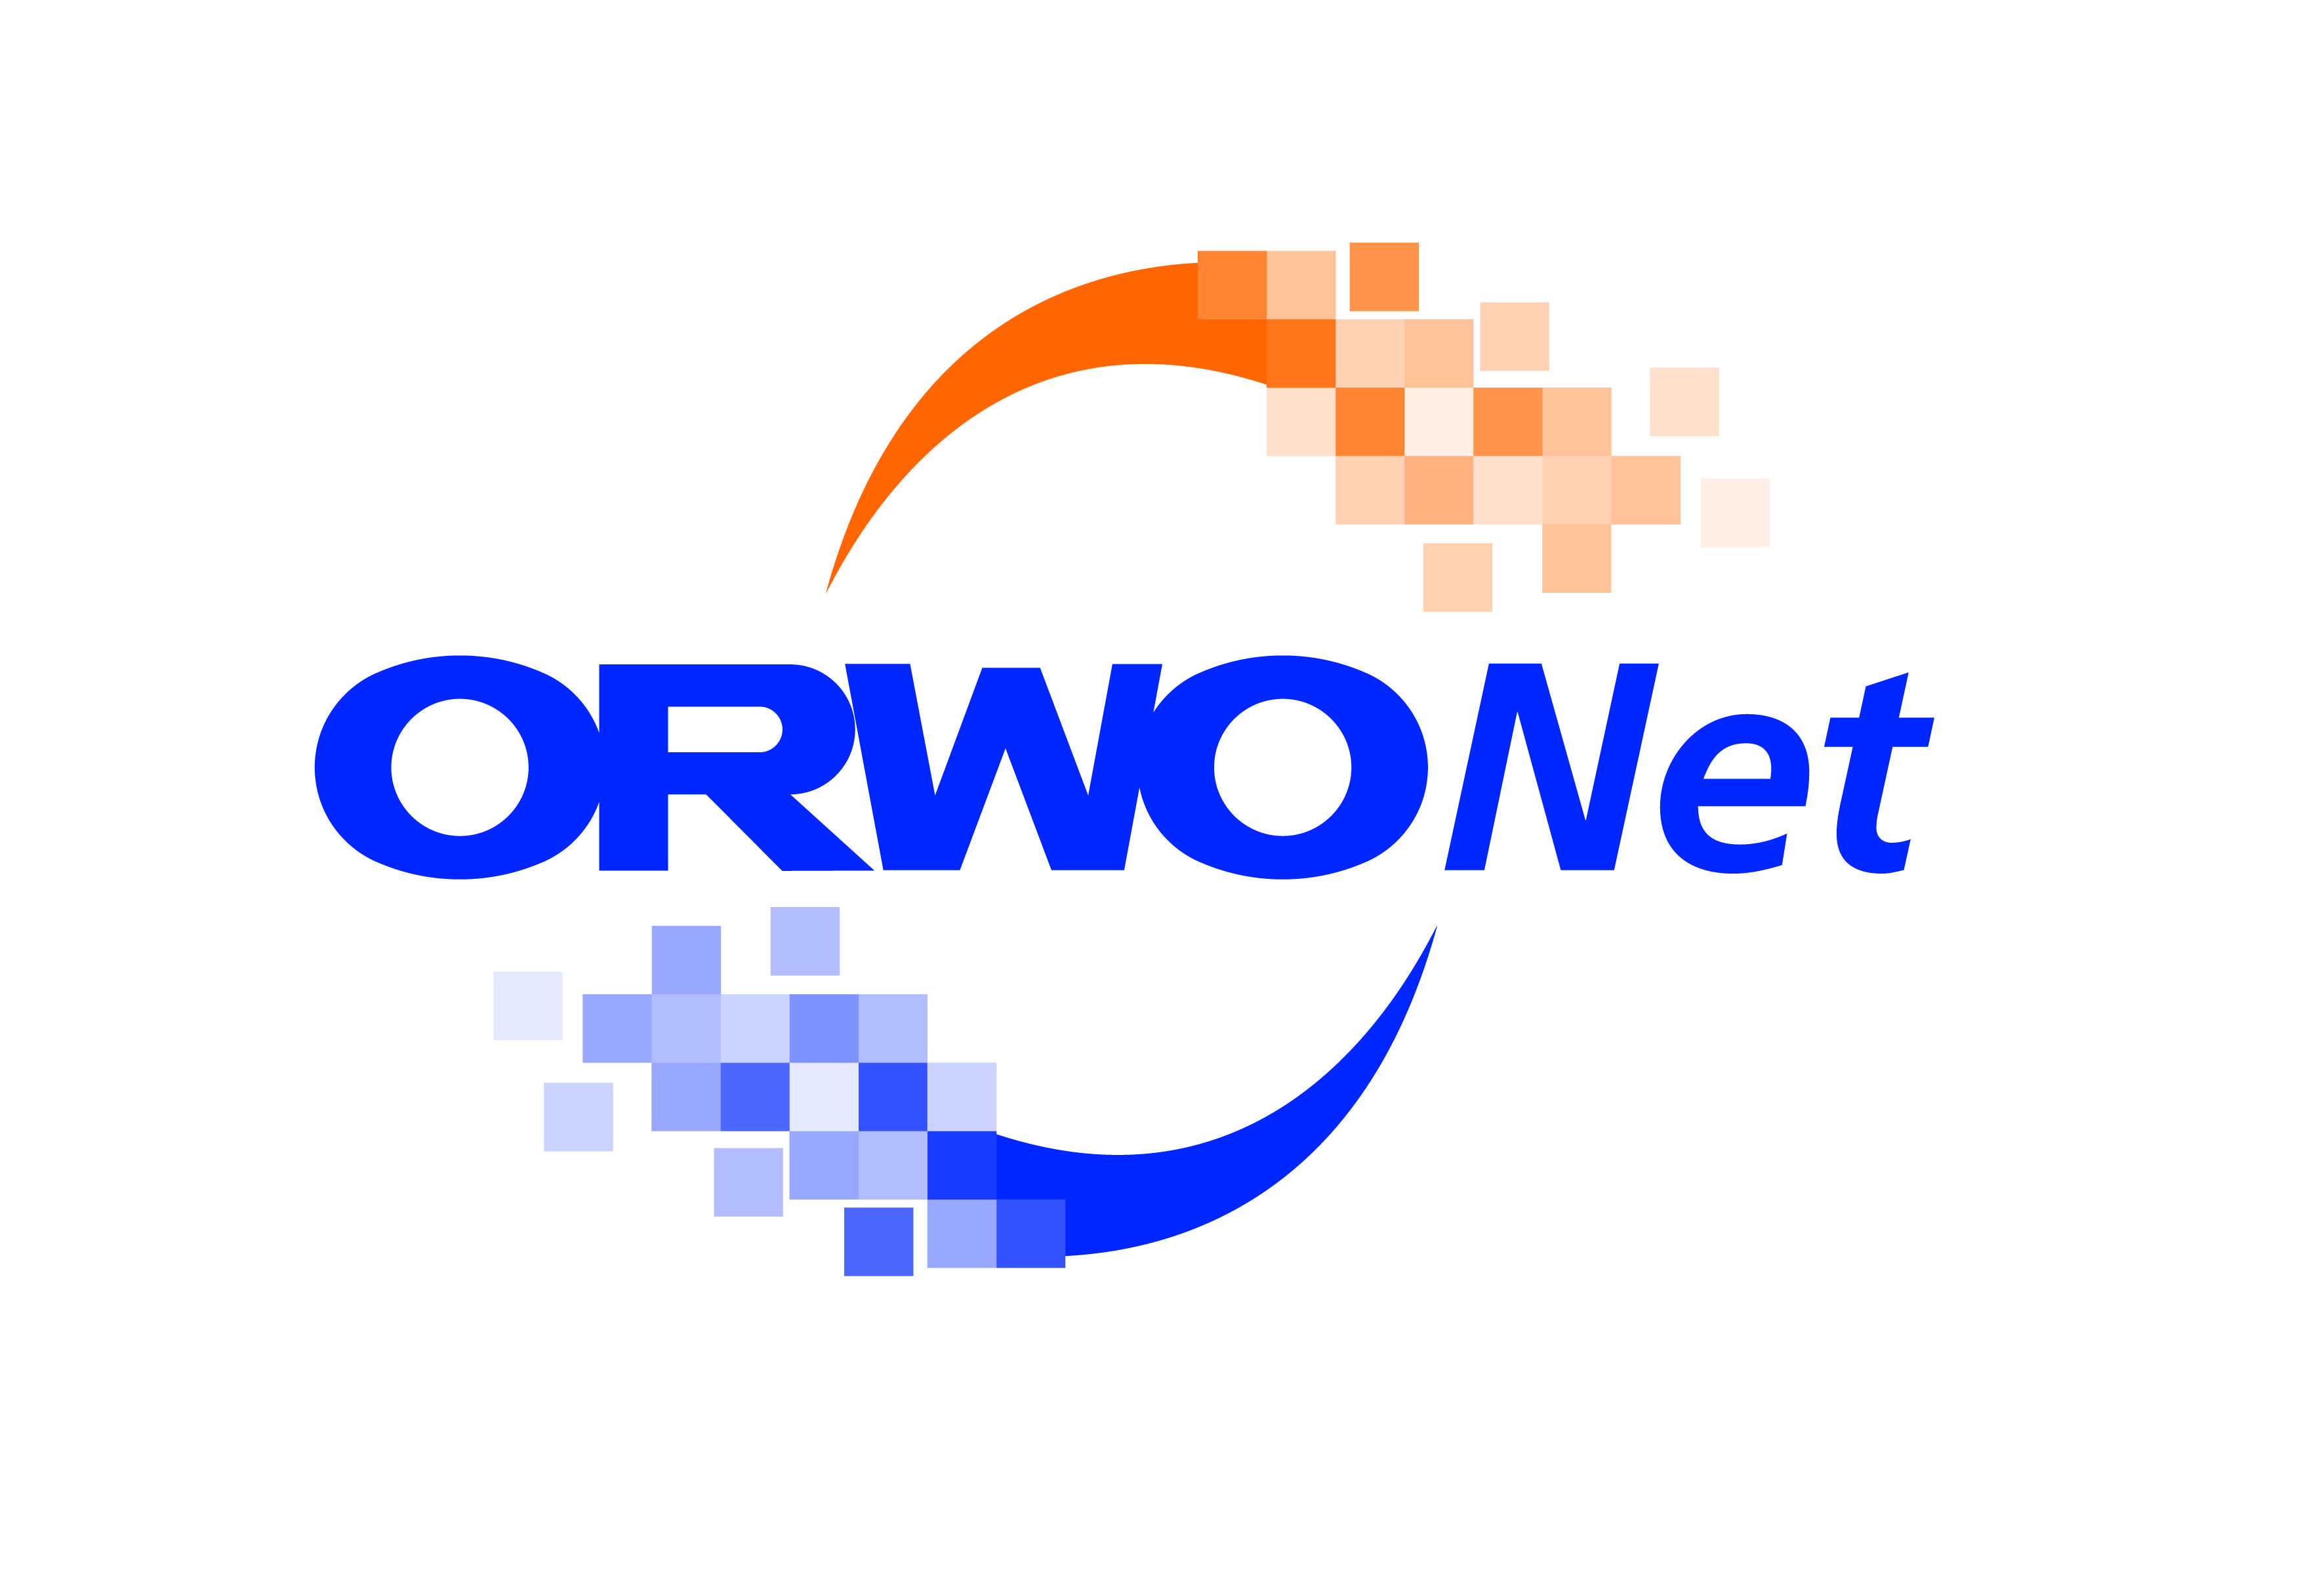 ORWO Net GmbH